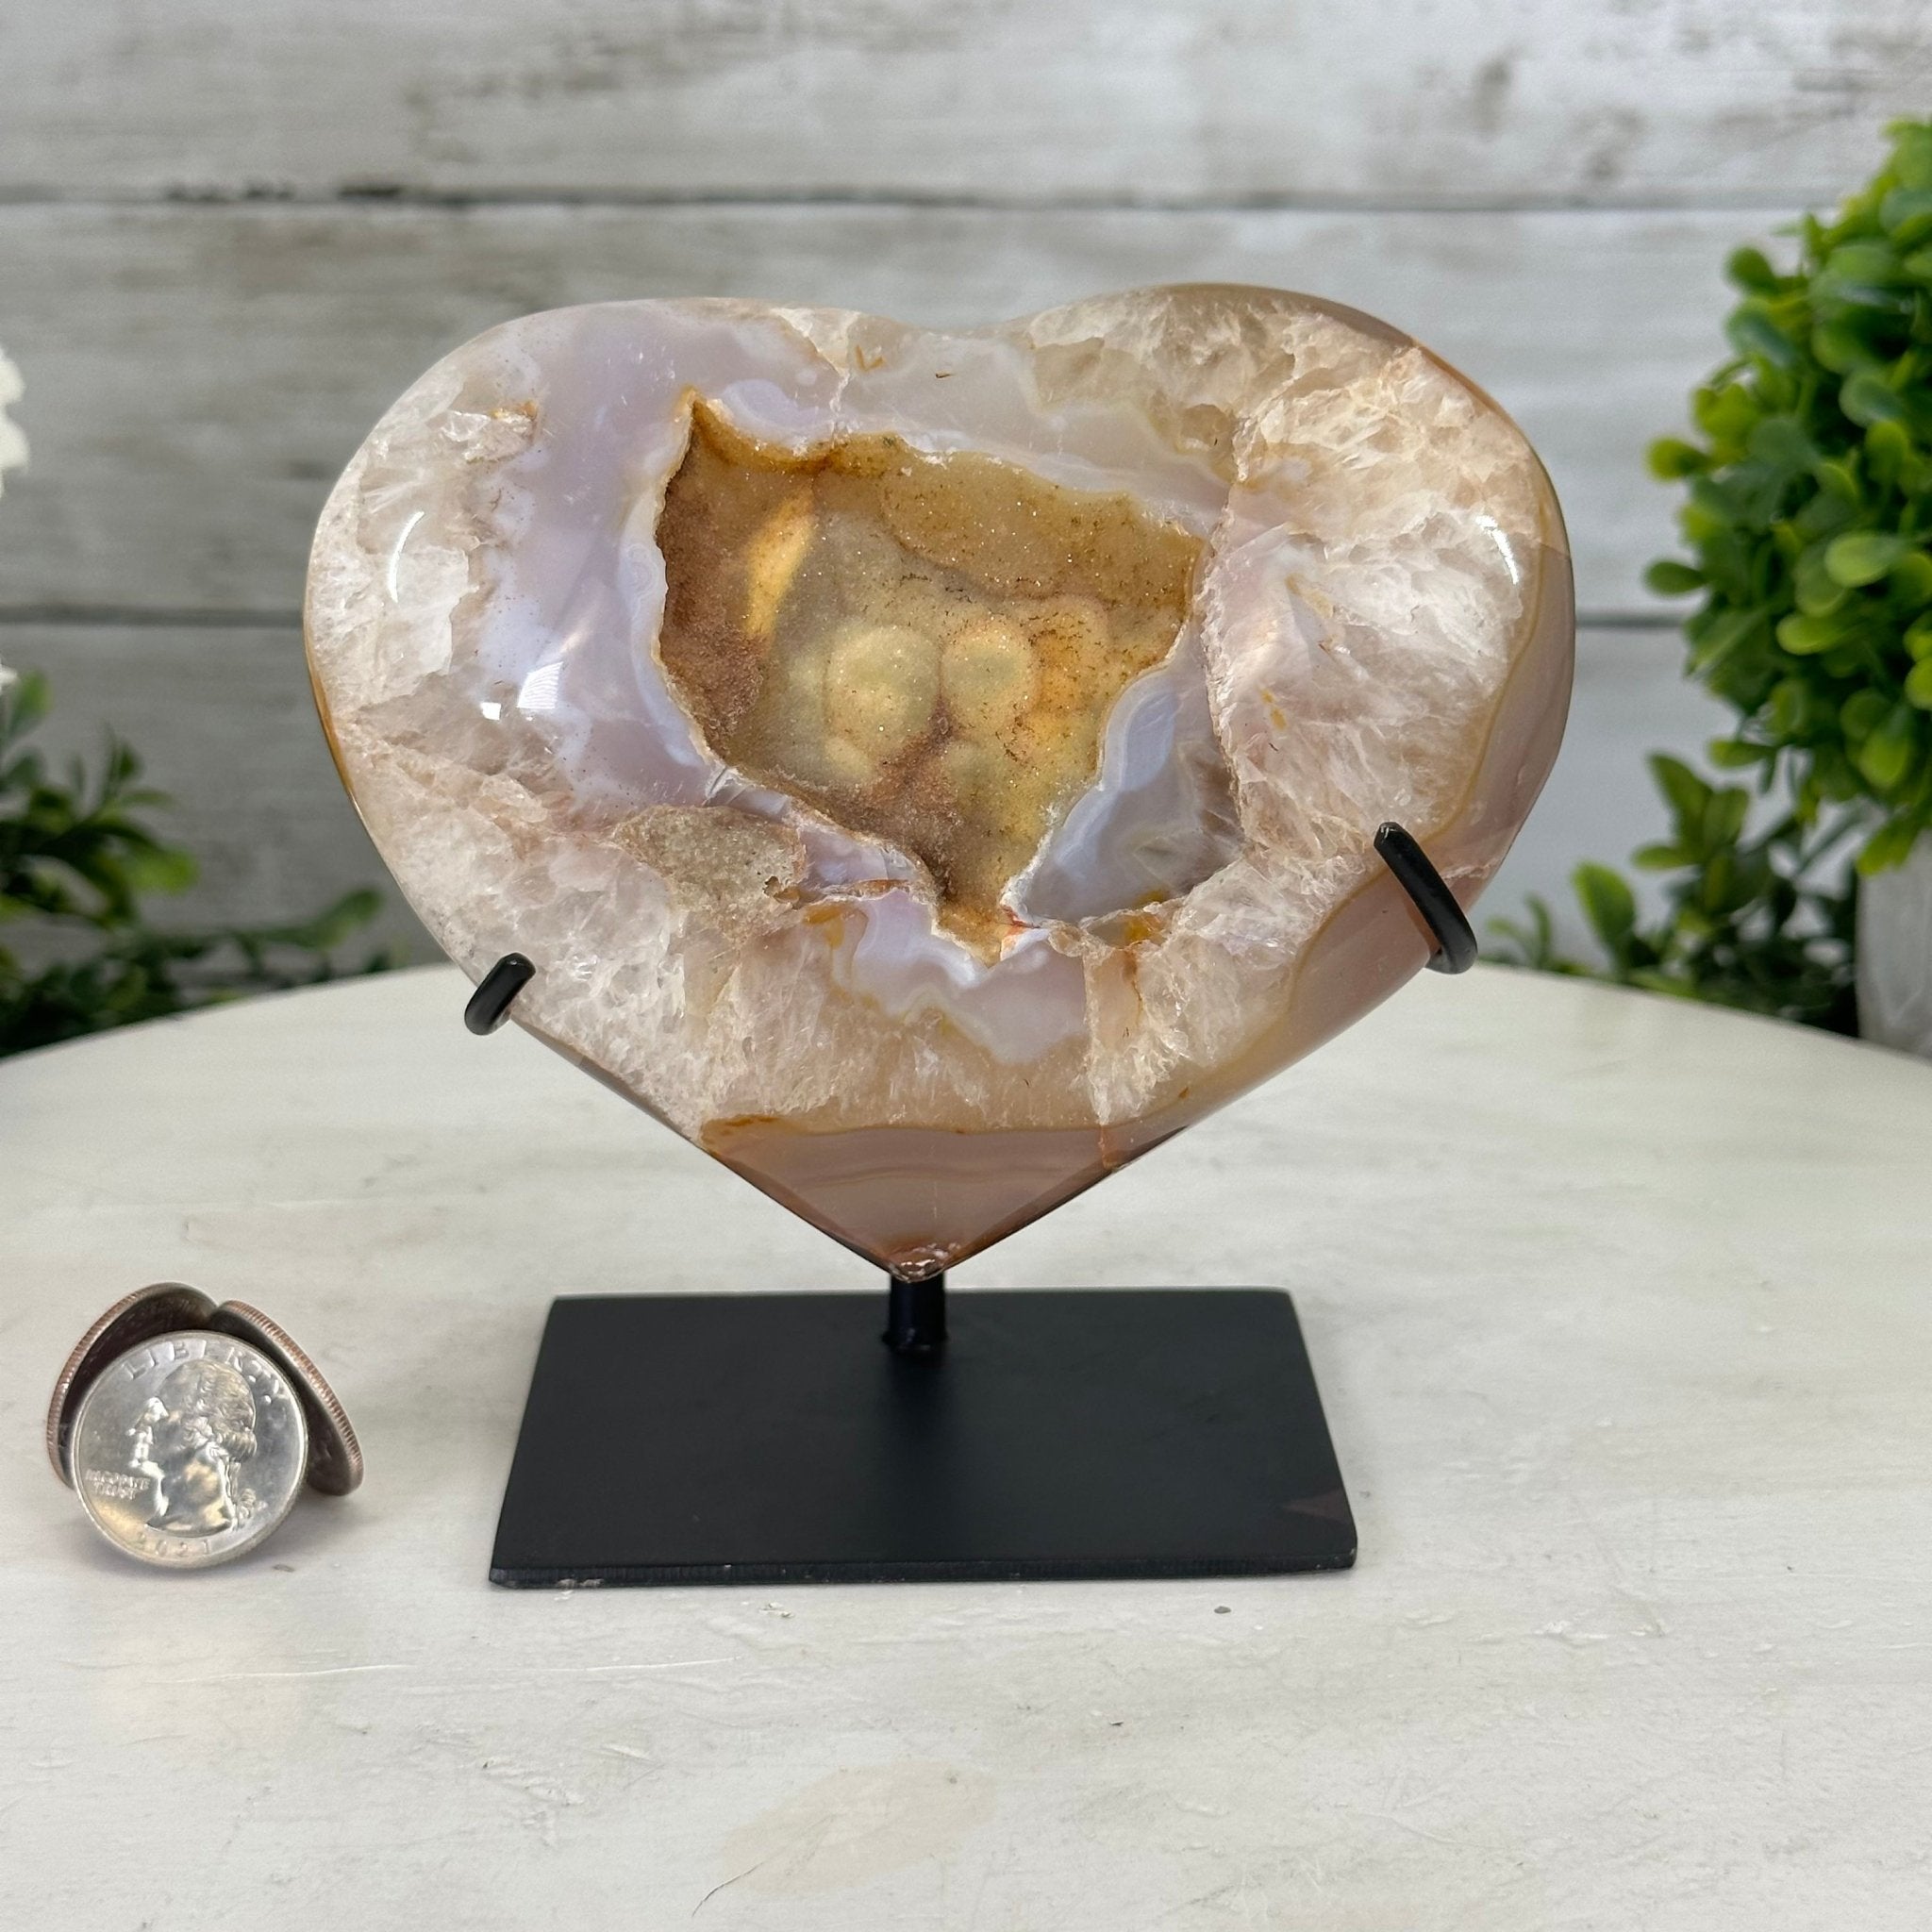 Polished Agate Heart Geode on a Metal Stand, 2.8 lbs & 5" Tall, Model #5468-0037 by Brazil Gems - Brazil GemsBrazil GemsPolished Agate Heart Geode on a Metal Stand, 2.8 lbs & 5" Tall, Model #5468-0037 by Brazil GemsHearts5468-0037